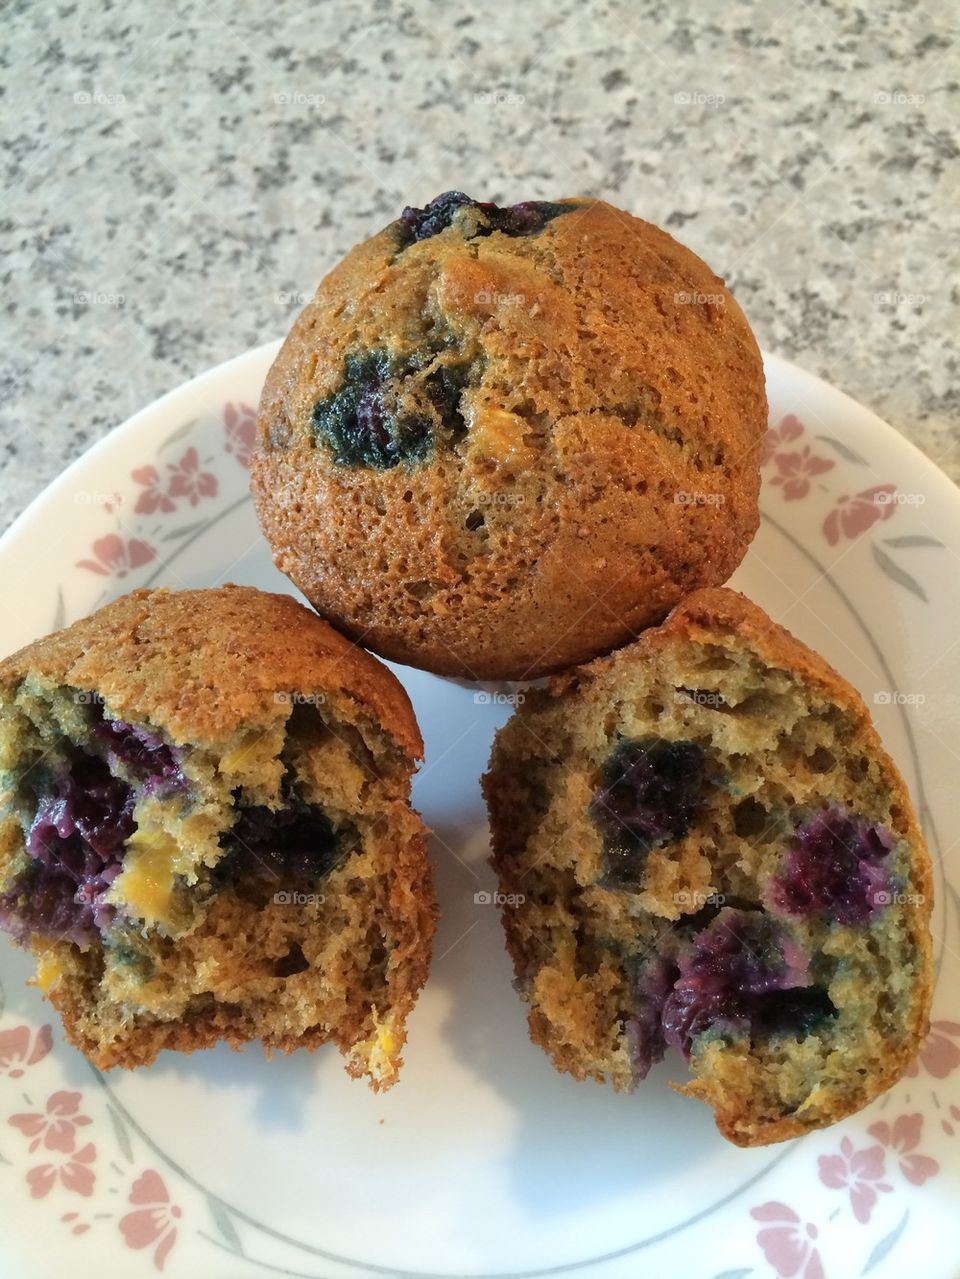 Blueberry peach muffins